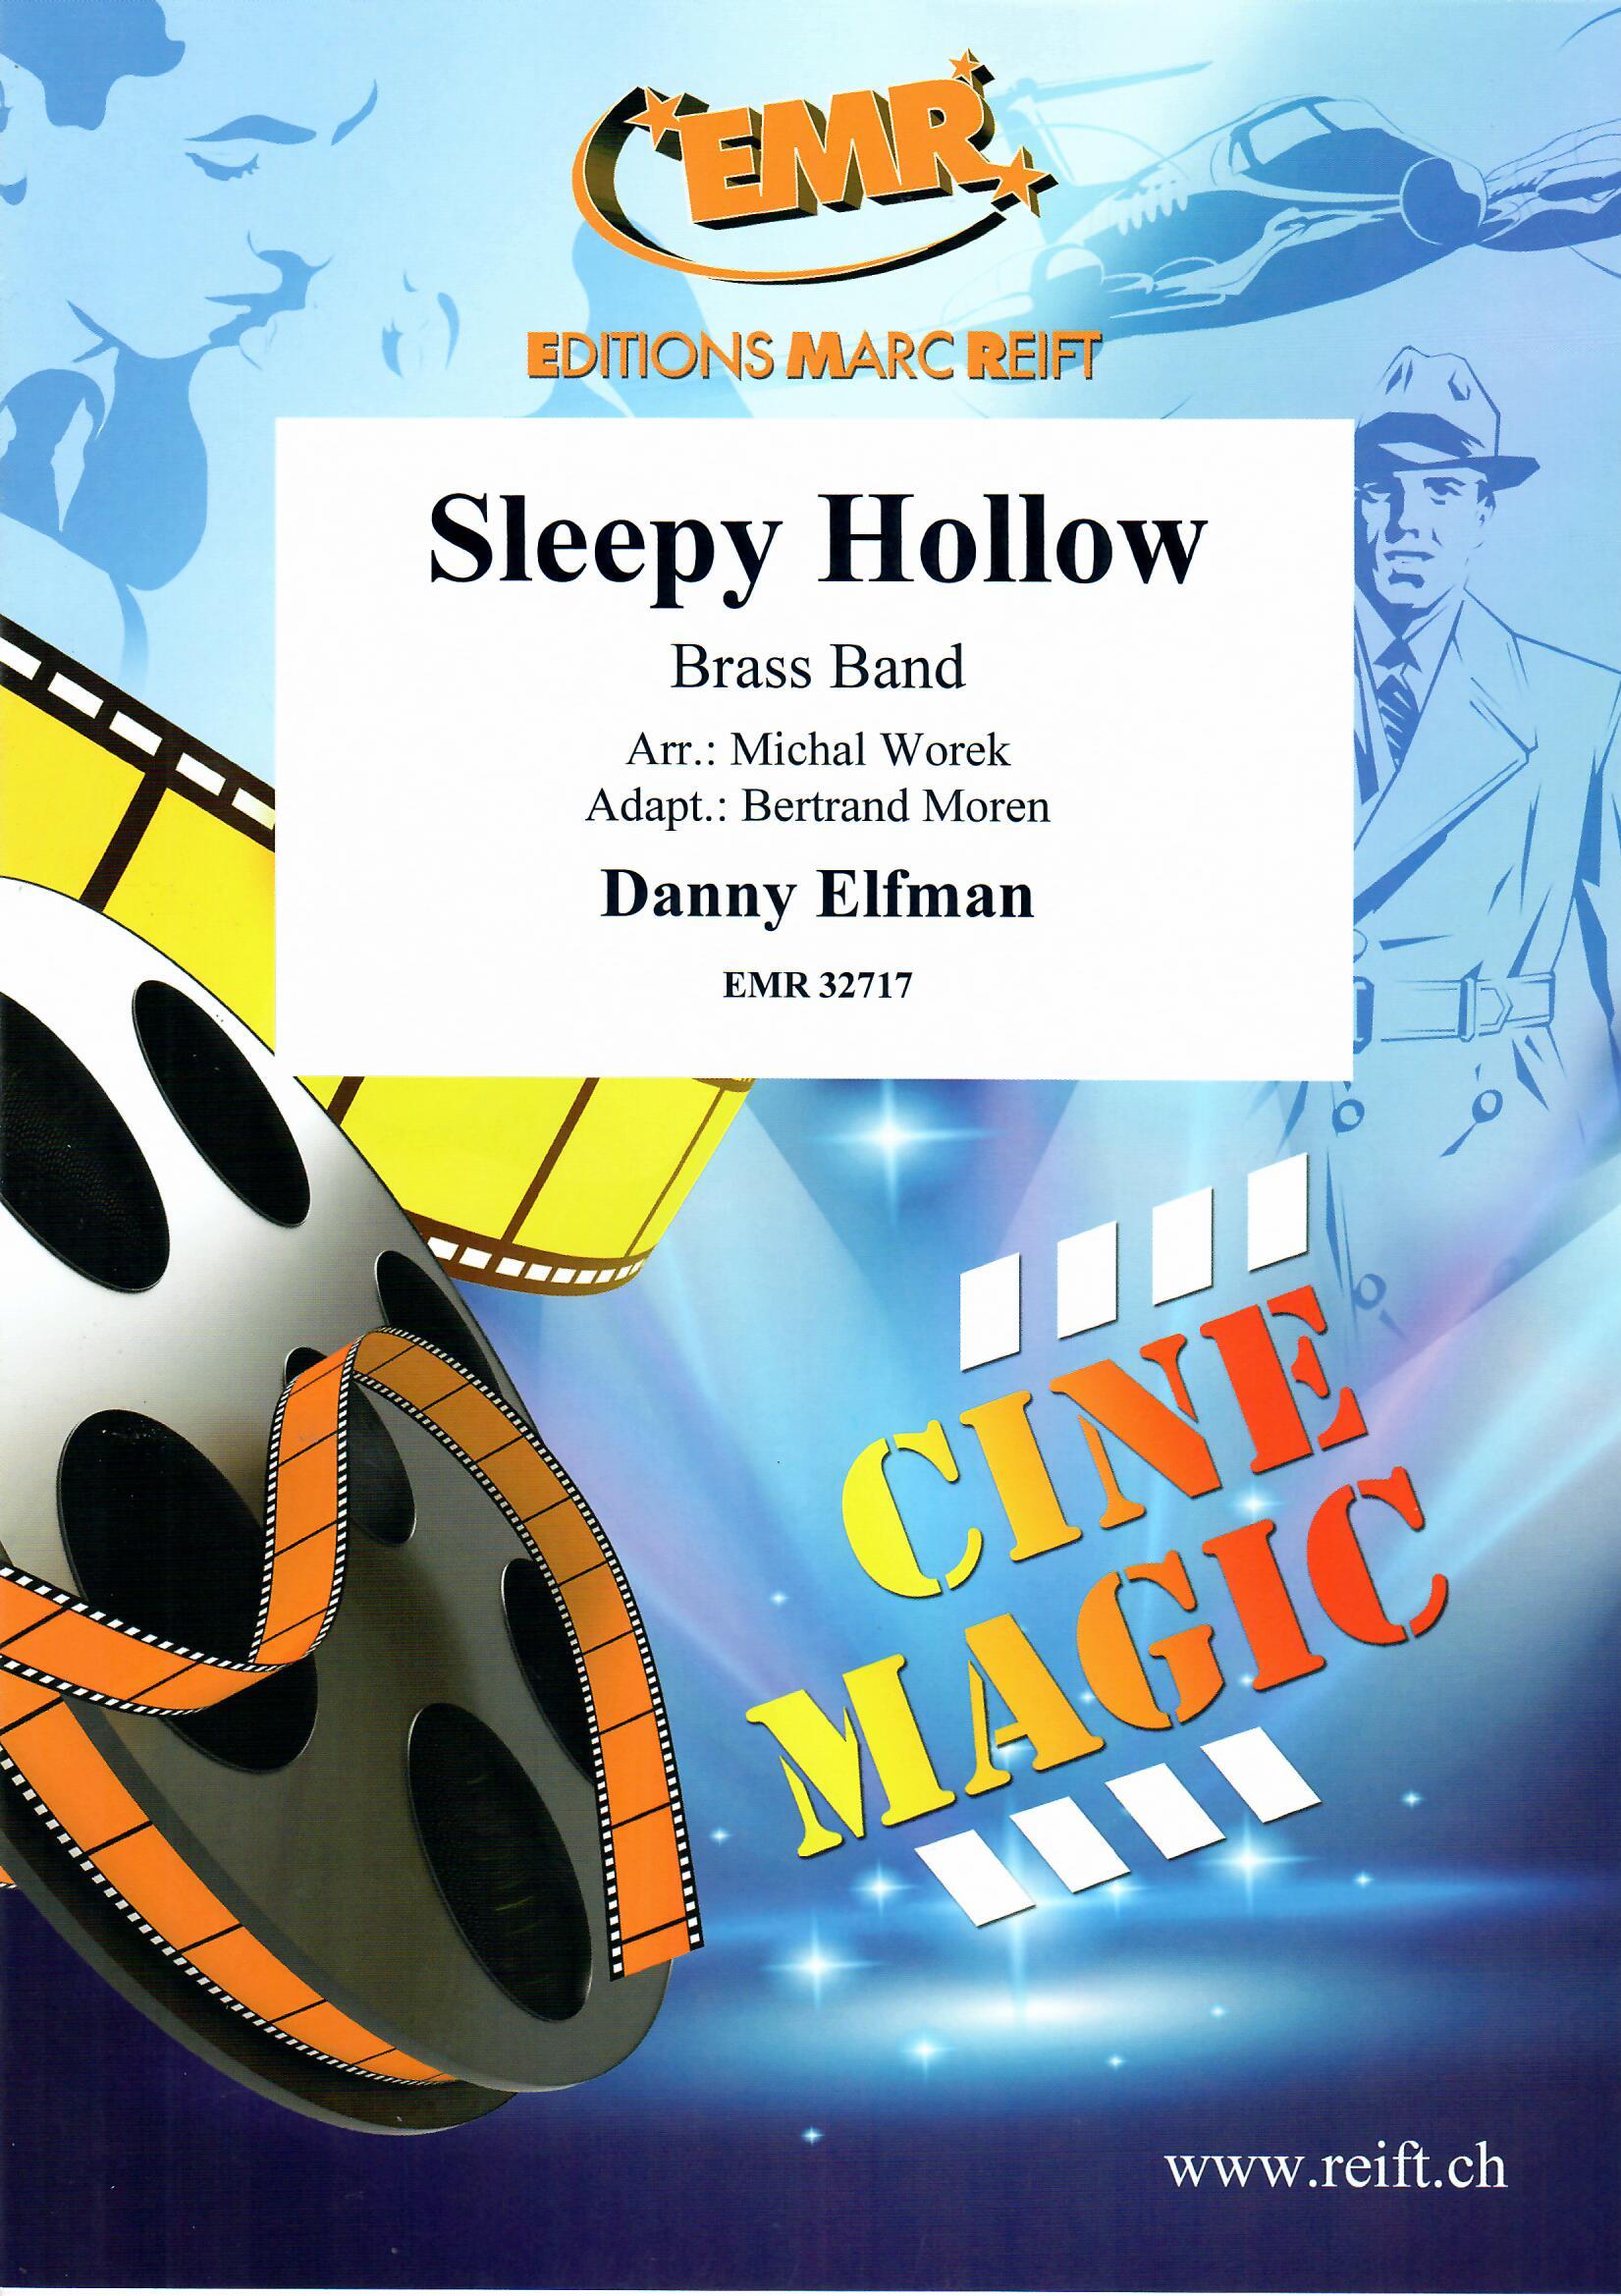 SLEEPY HOLLOW, NEW & RECENT Publications, FILM MUSIC & MUSICALS